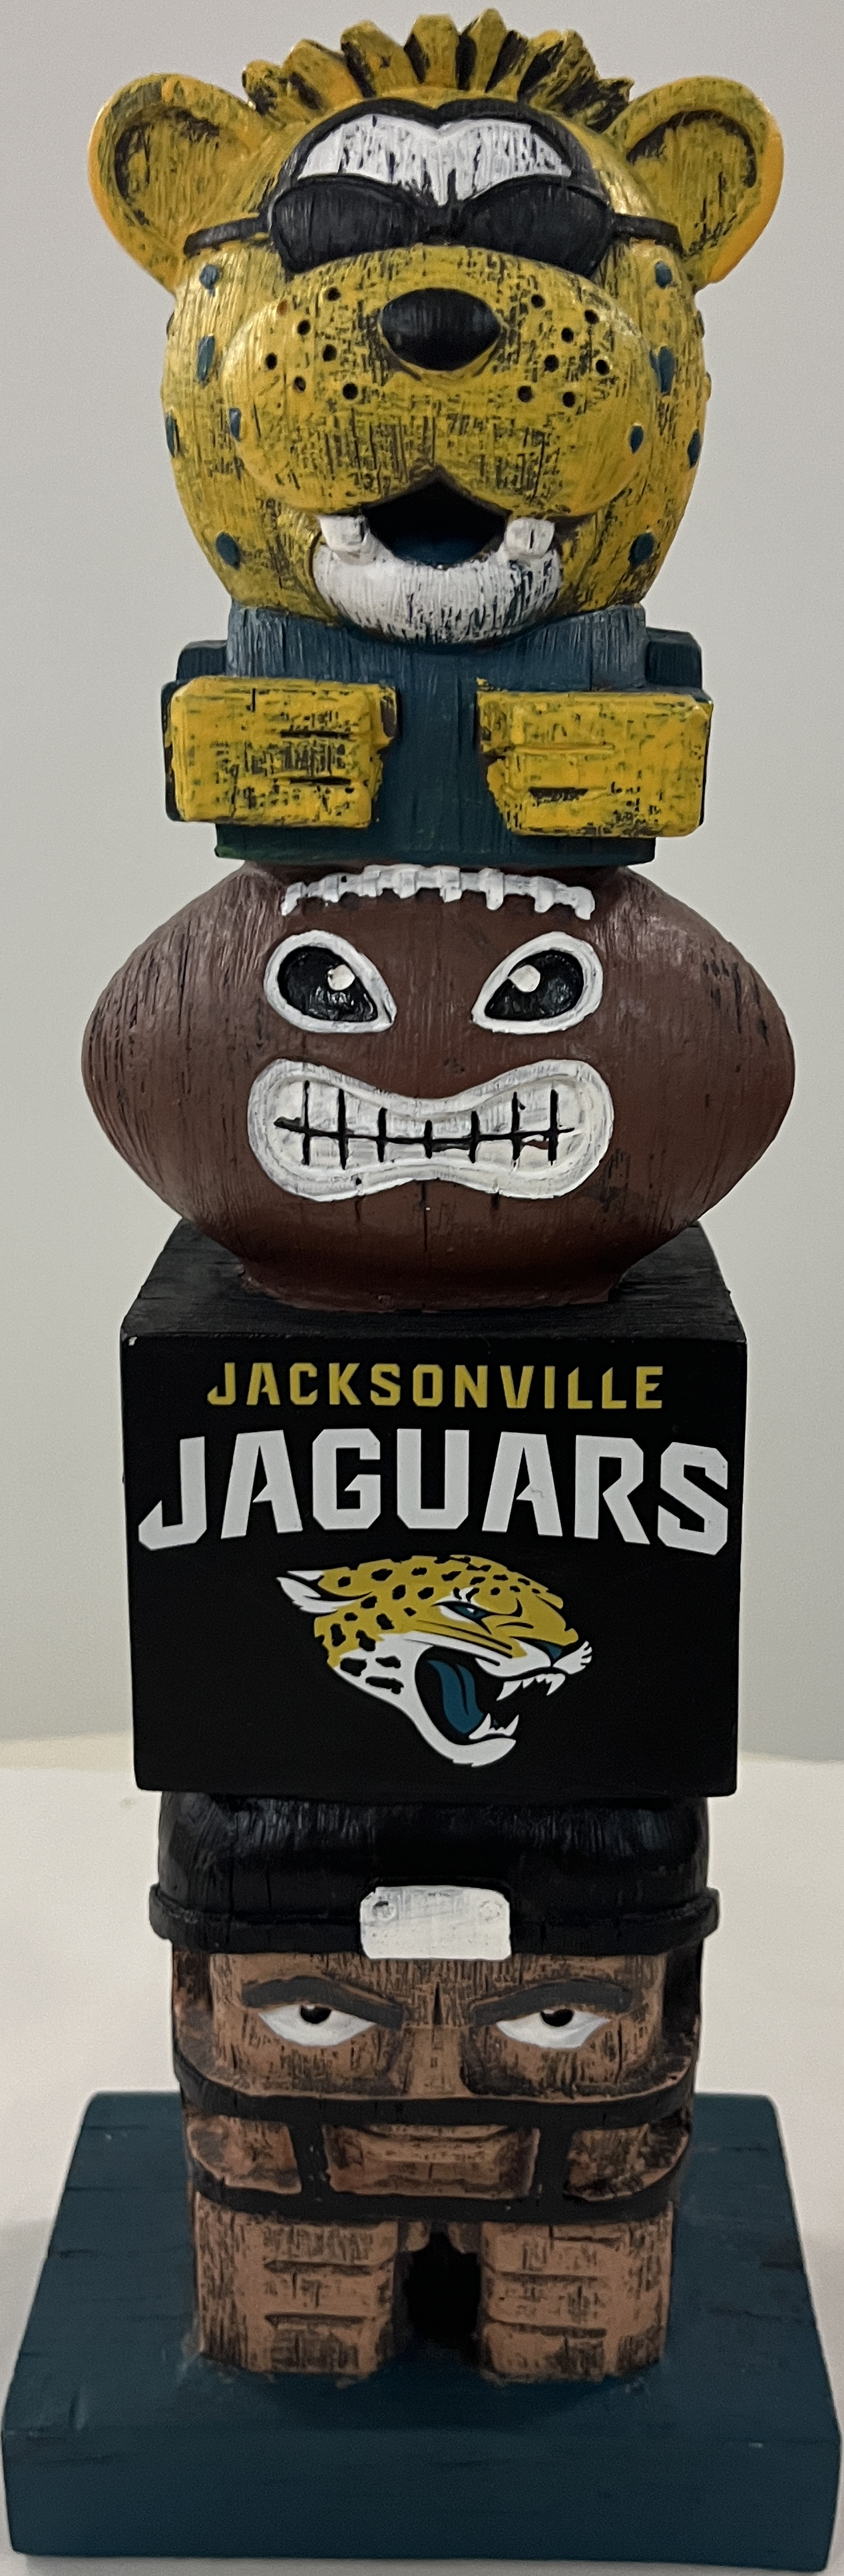 Jacksonville Jaguars Totem